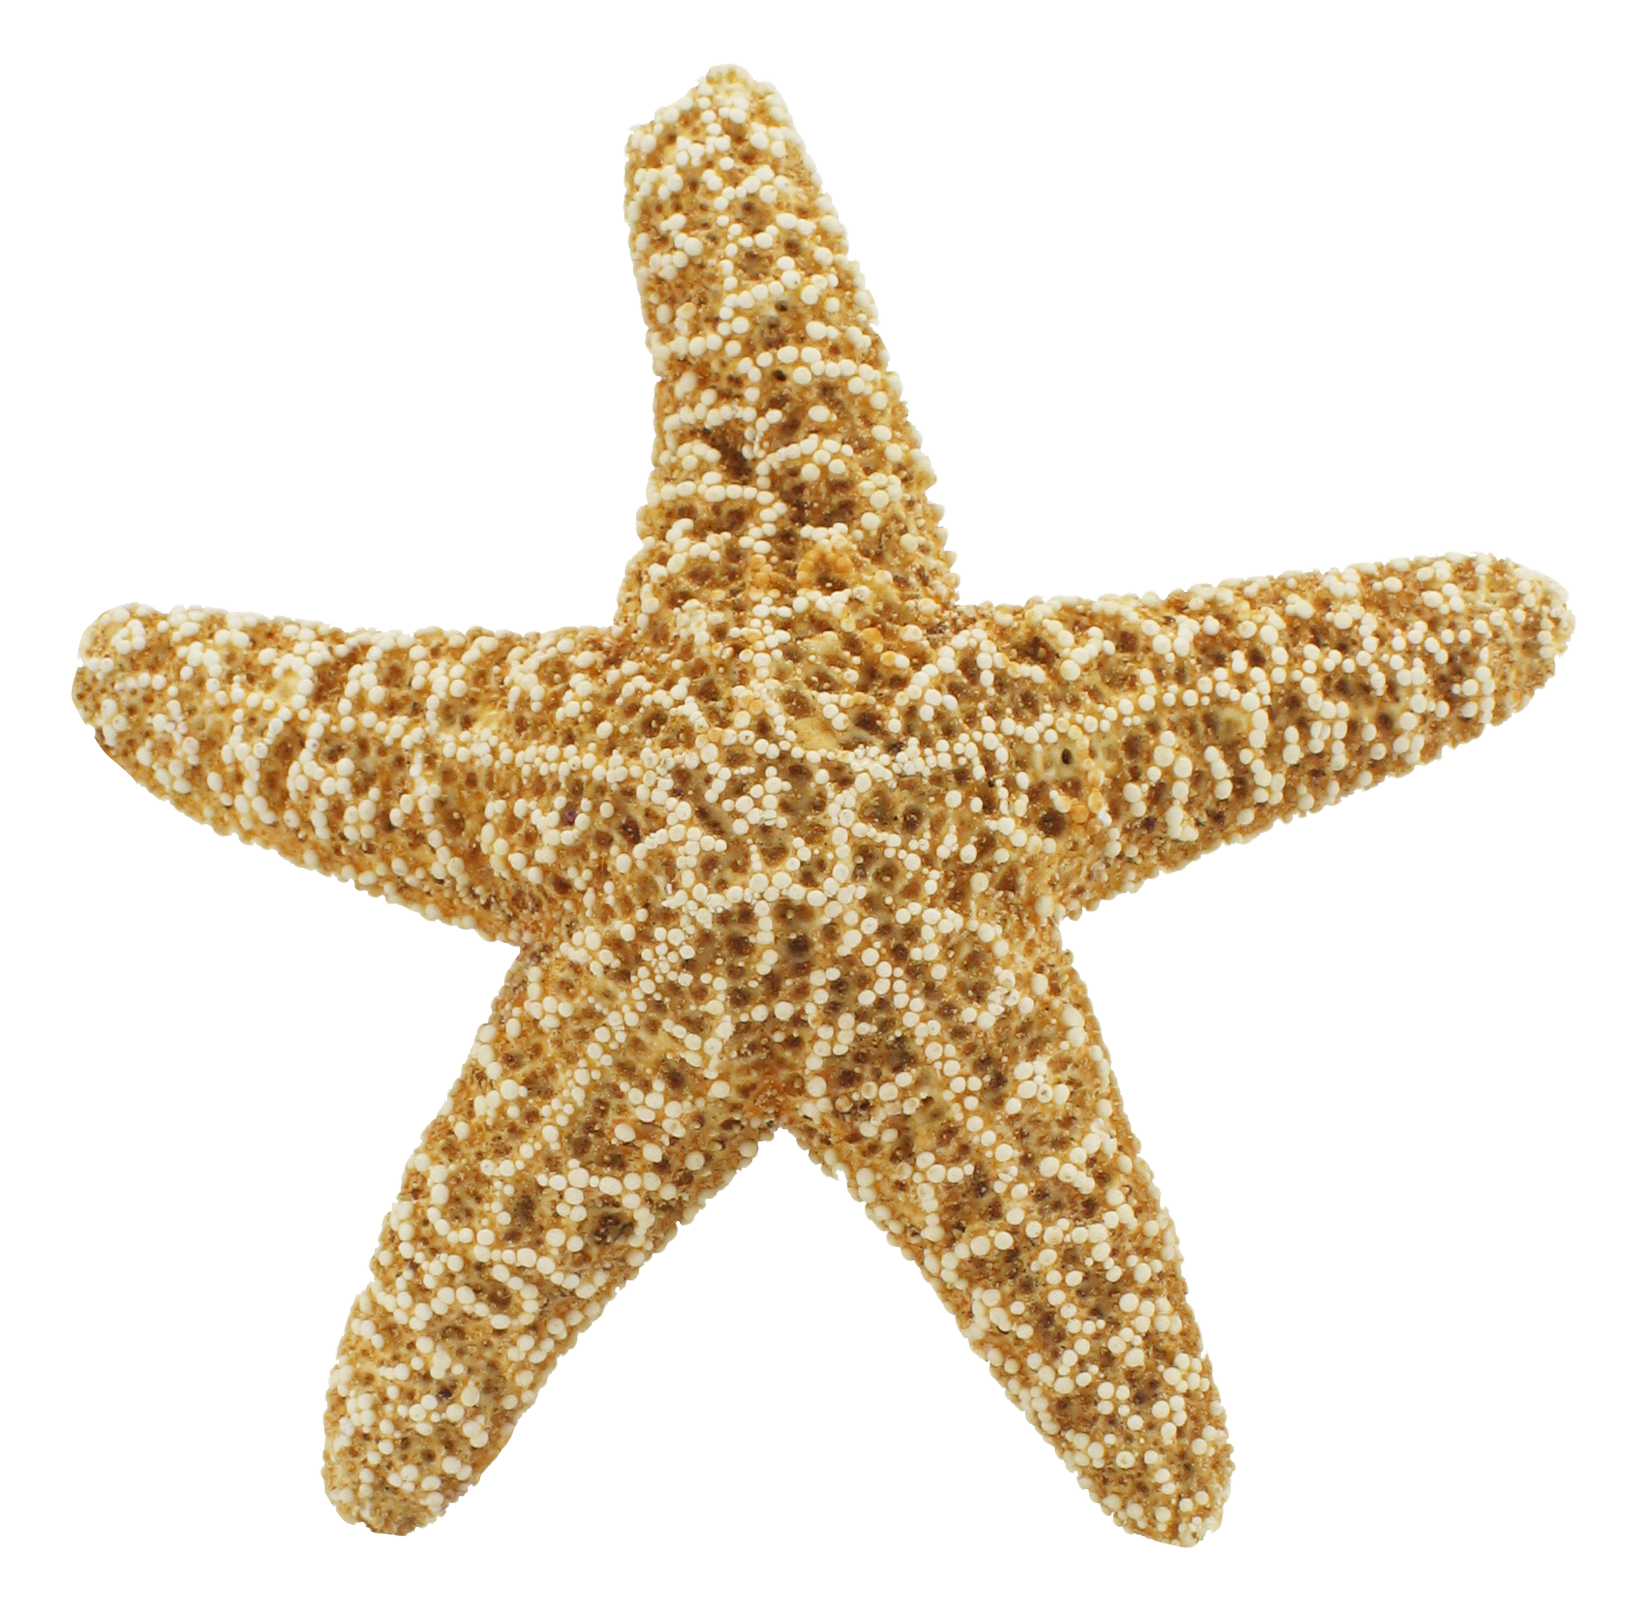 Starfish Download PNG Image